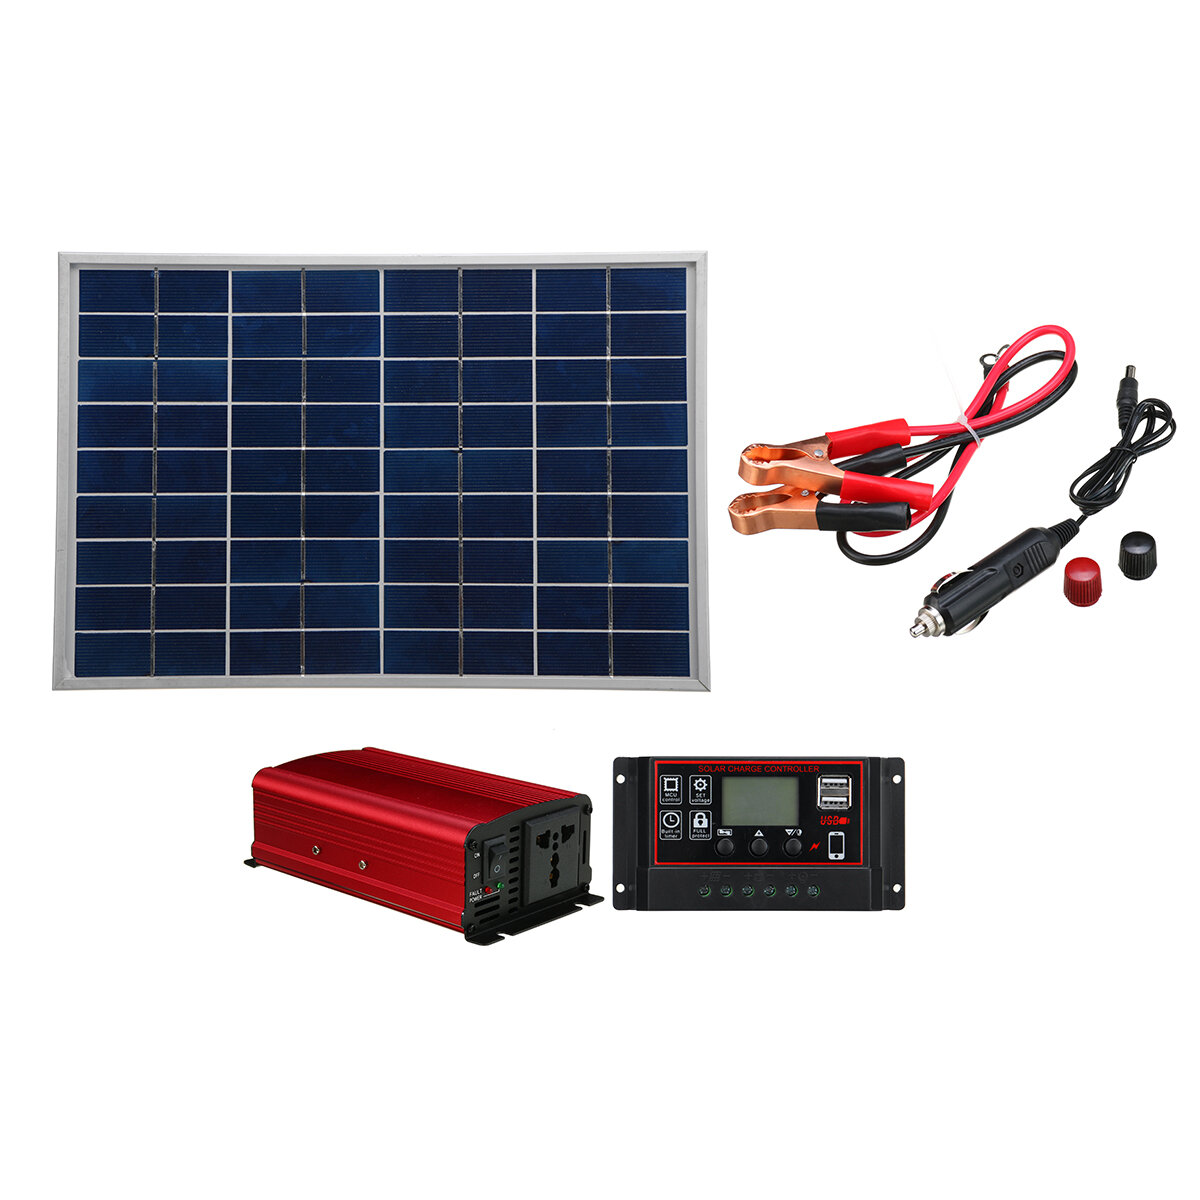 

Солнечная панель Power System Complete Набор 18V 30W Солнечная панель 60A Зарядное устройство USB-контроллер 1000W Солне